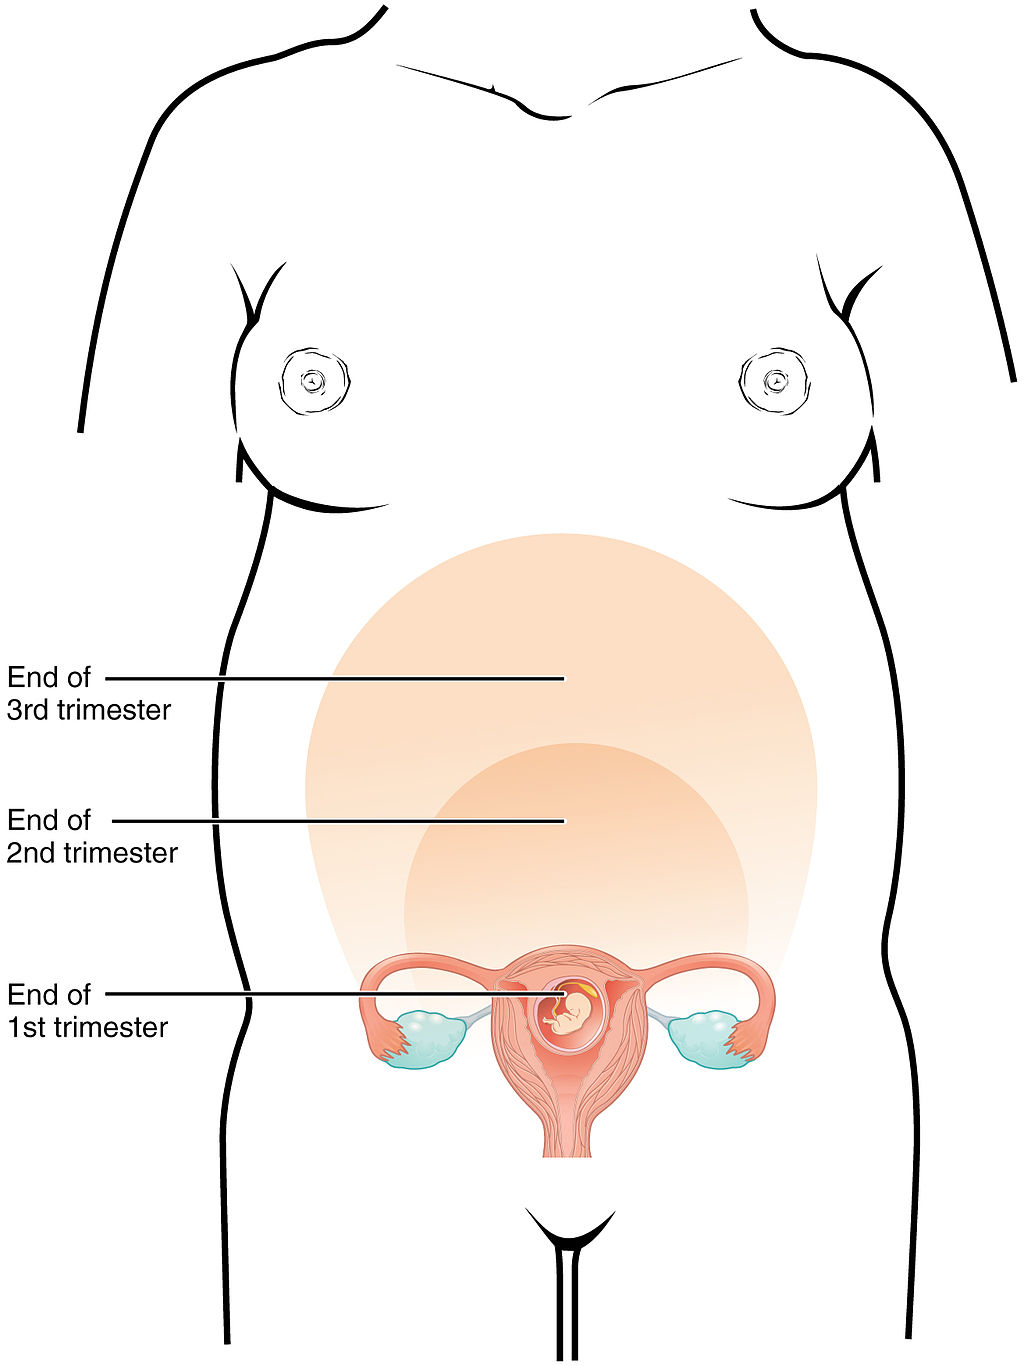 12.3.9 Growing uterus.